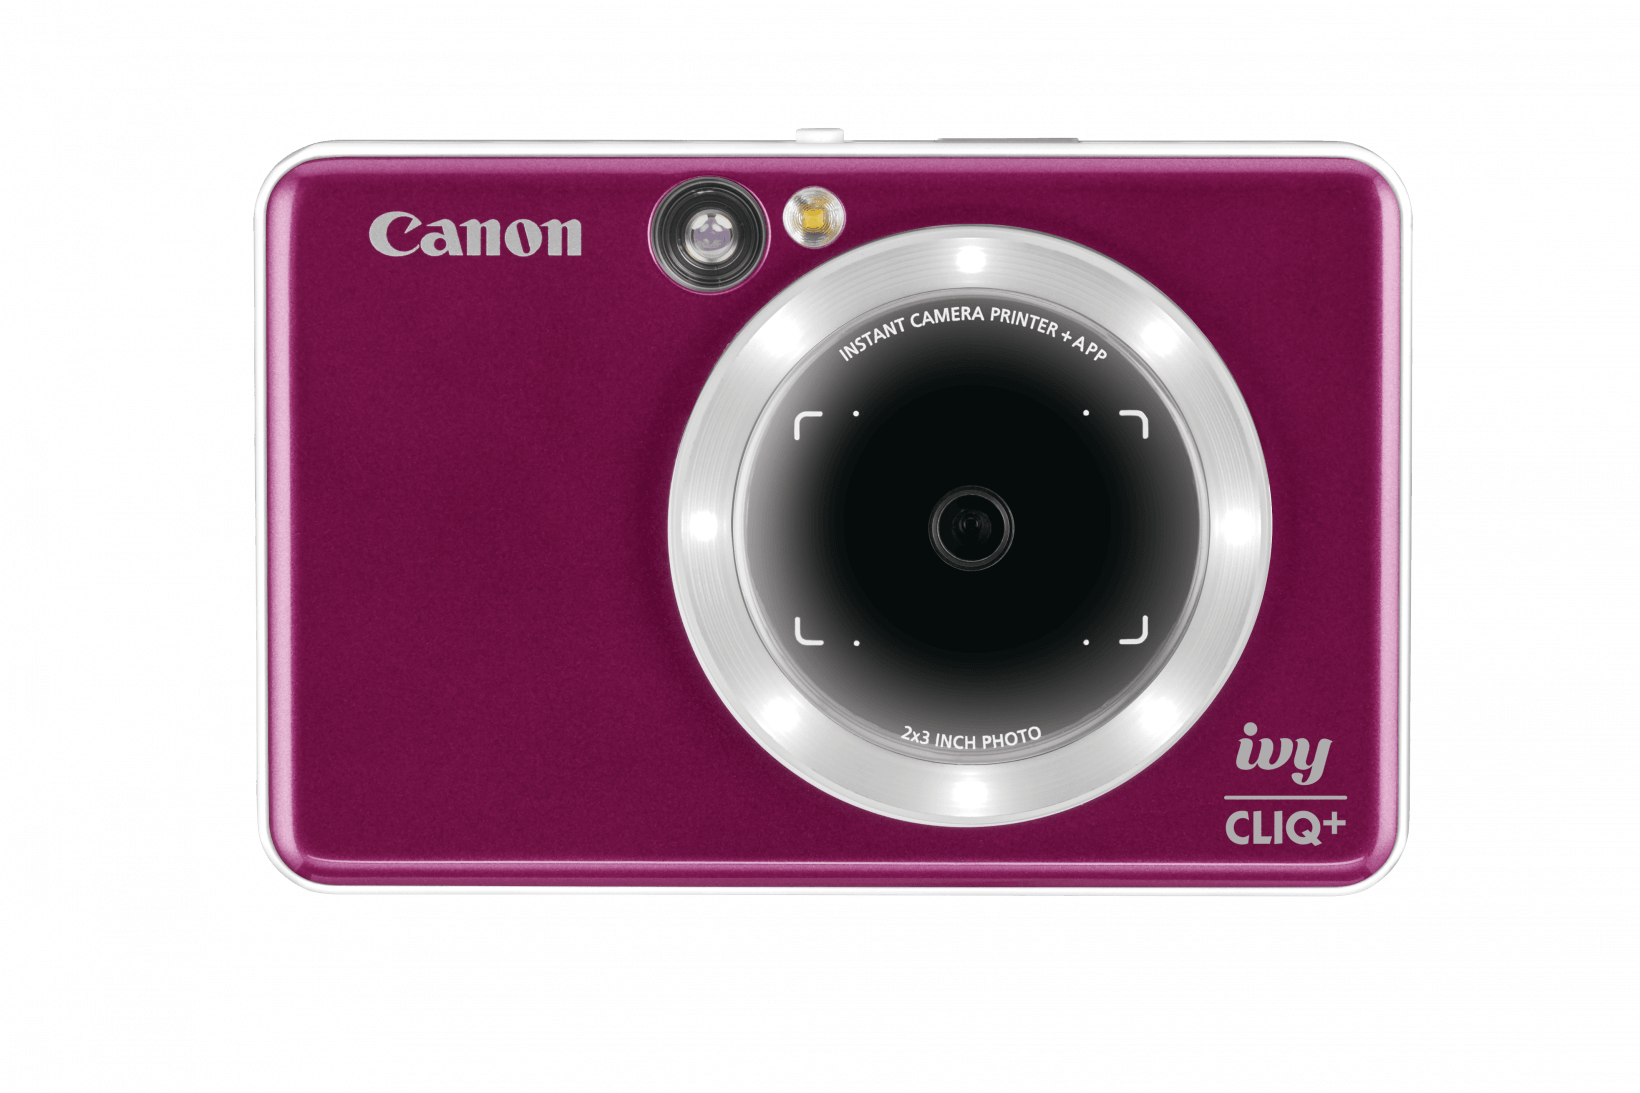 Canon I V Y C L I Q Plus Instant Camera Printer Purple PNG